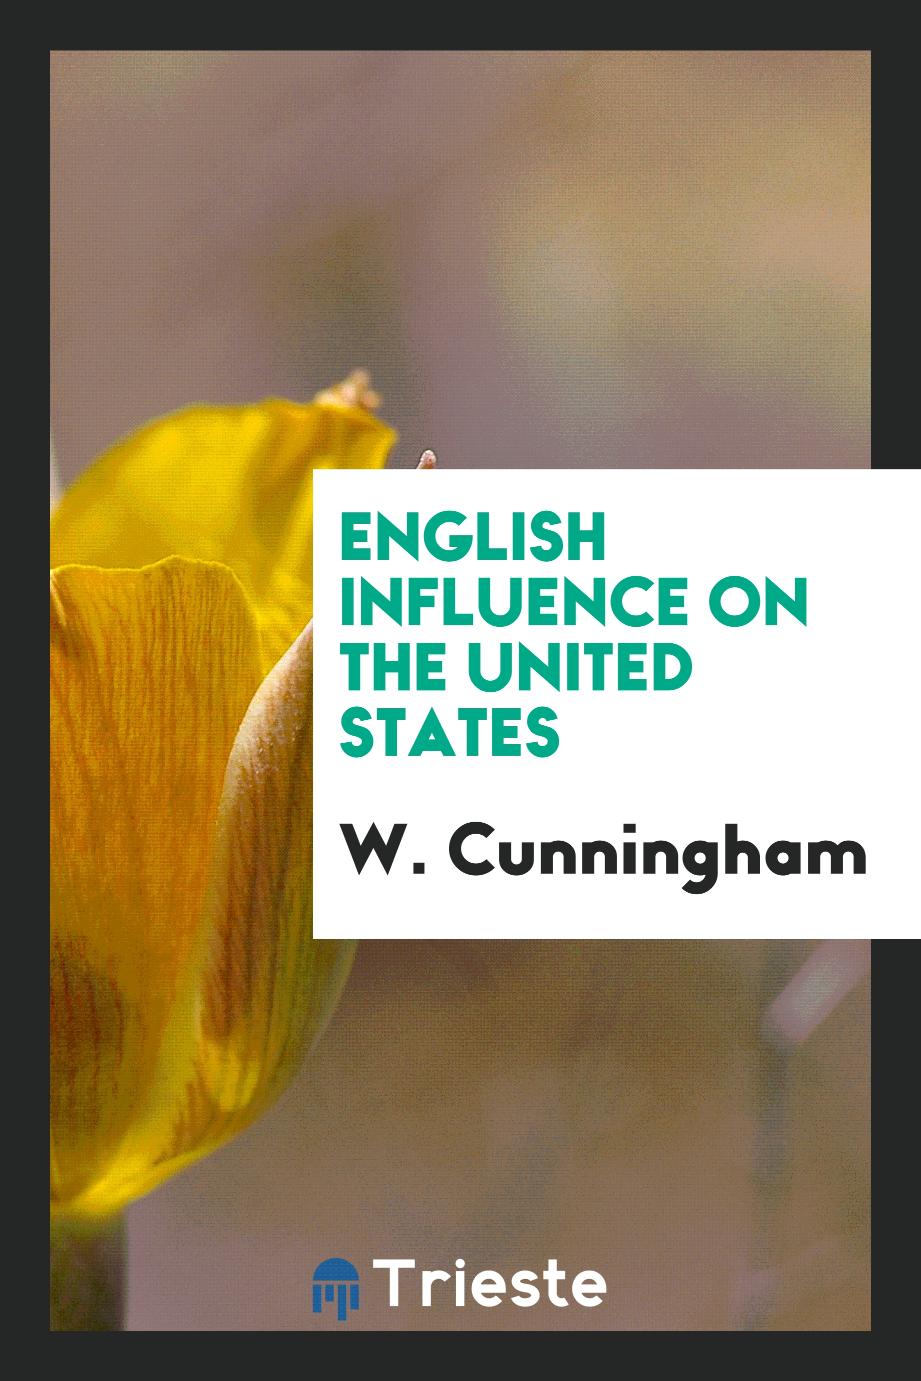 English influence on the United States